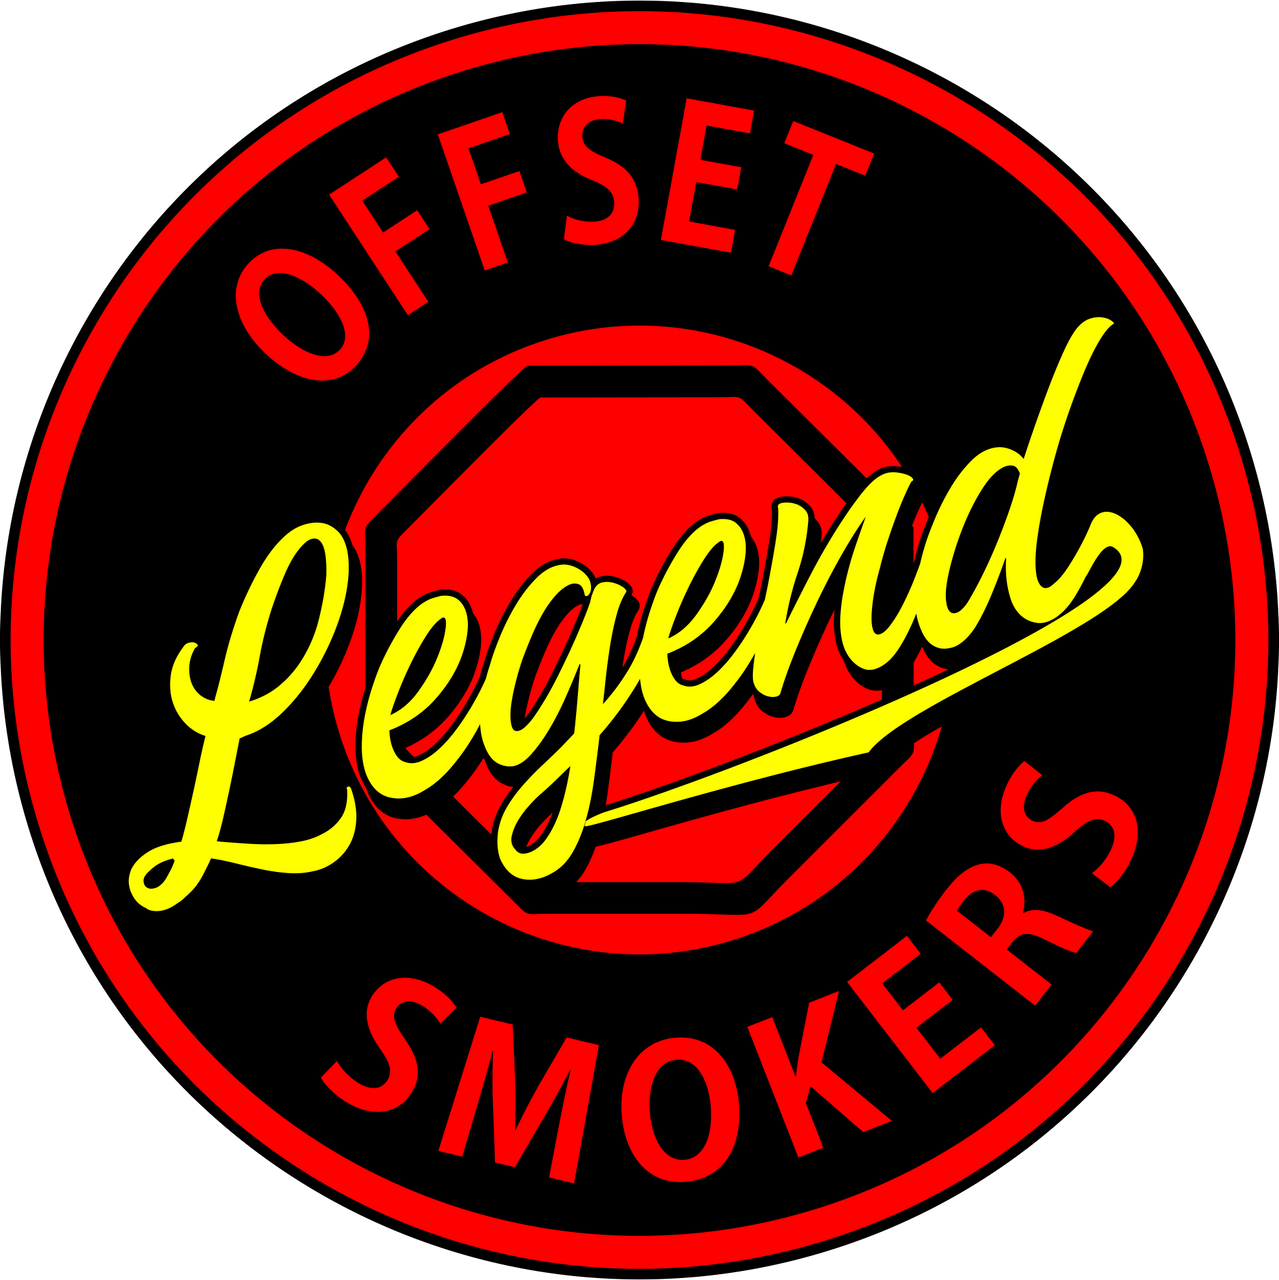 Legend Smokers